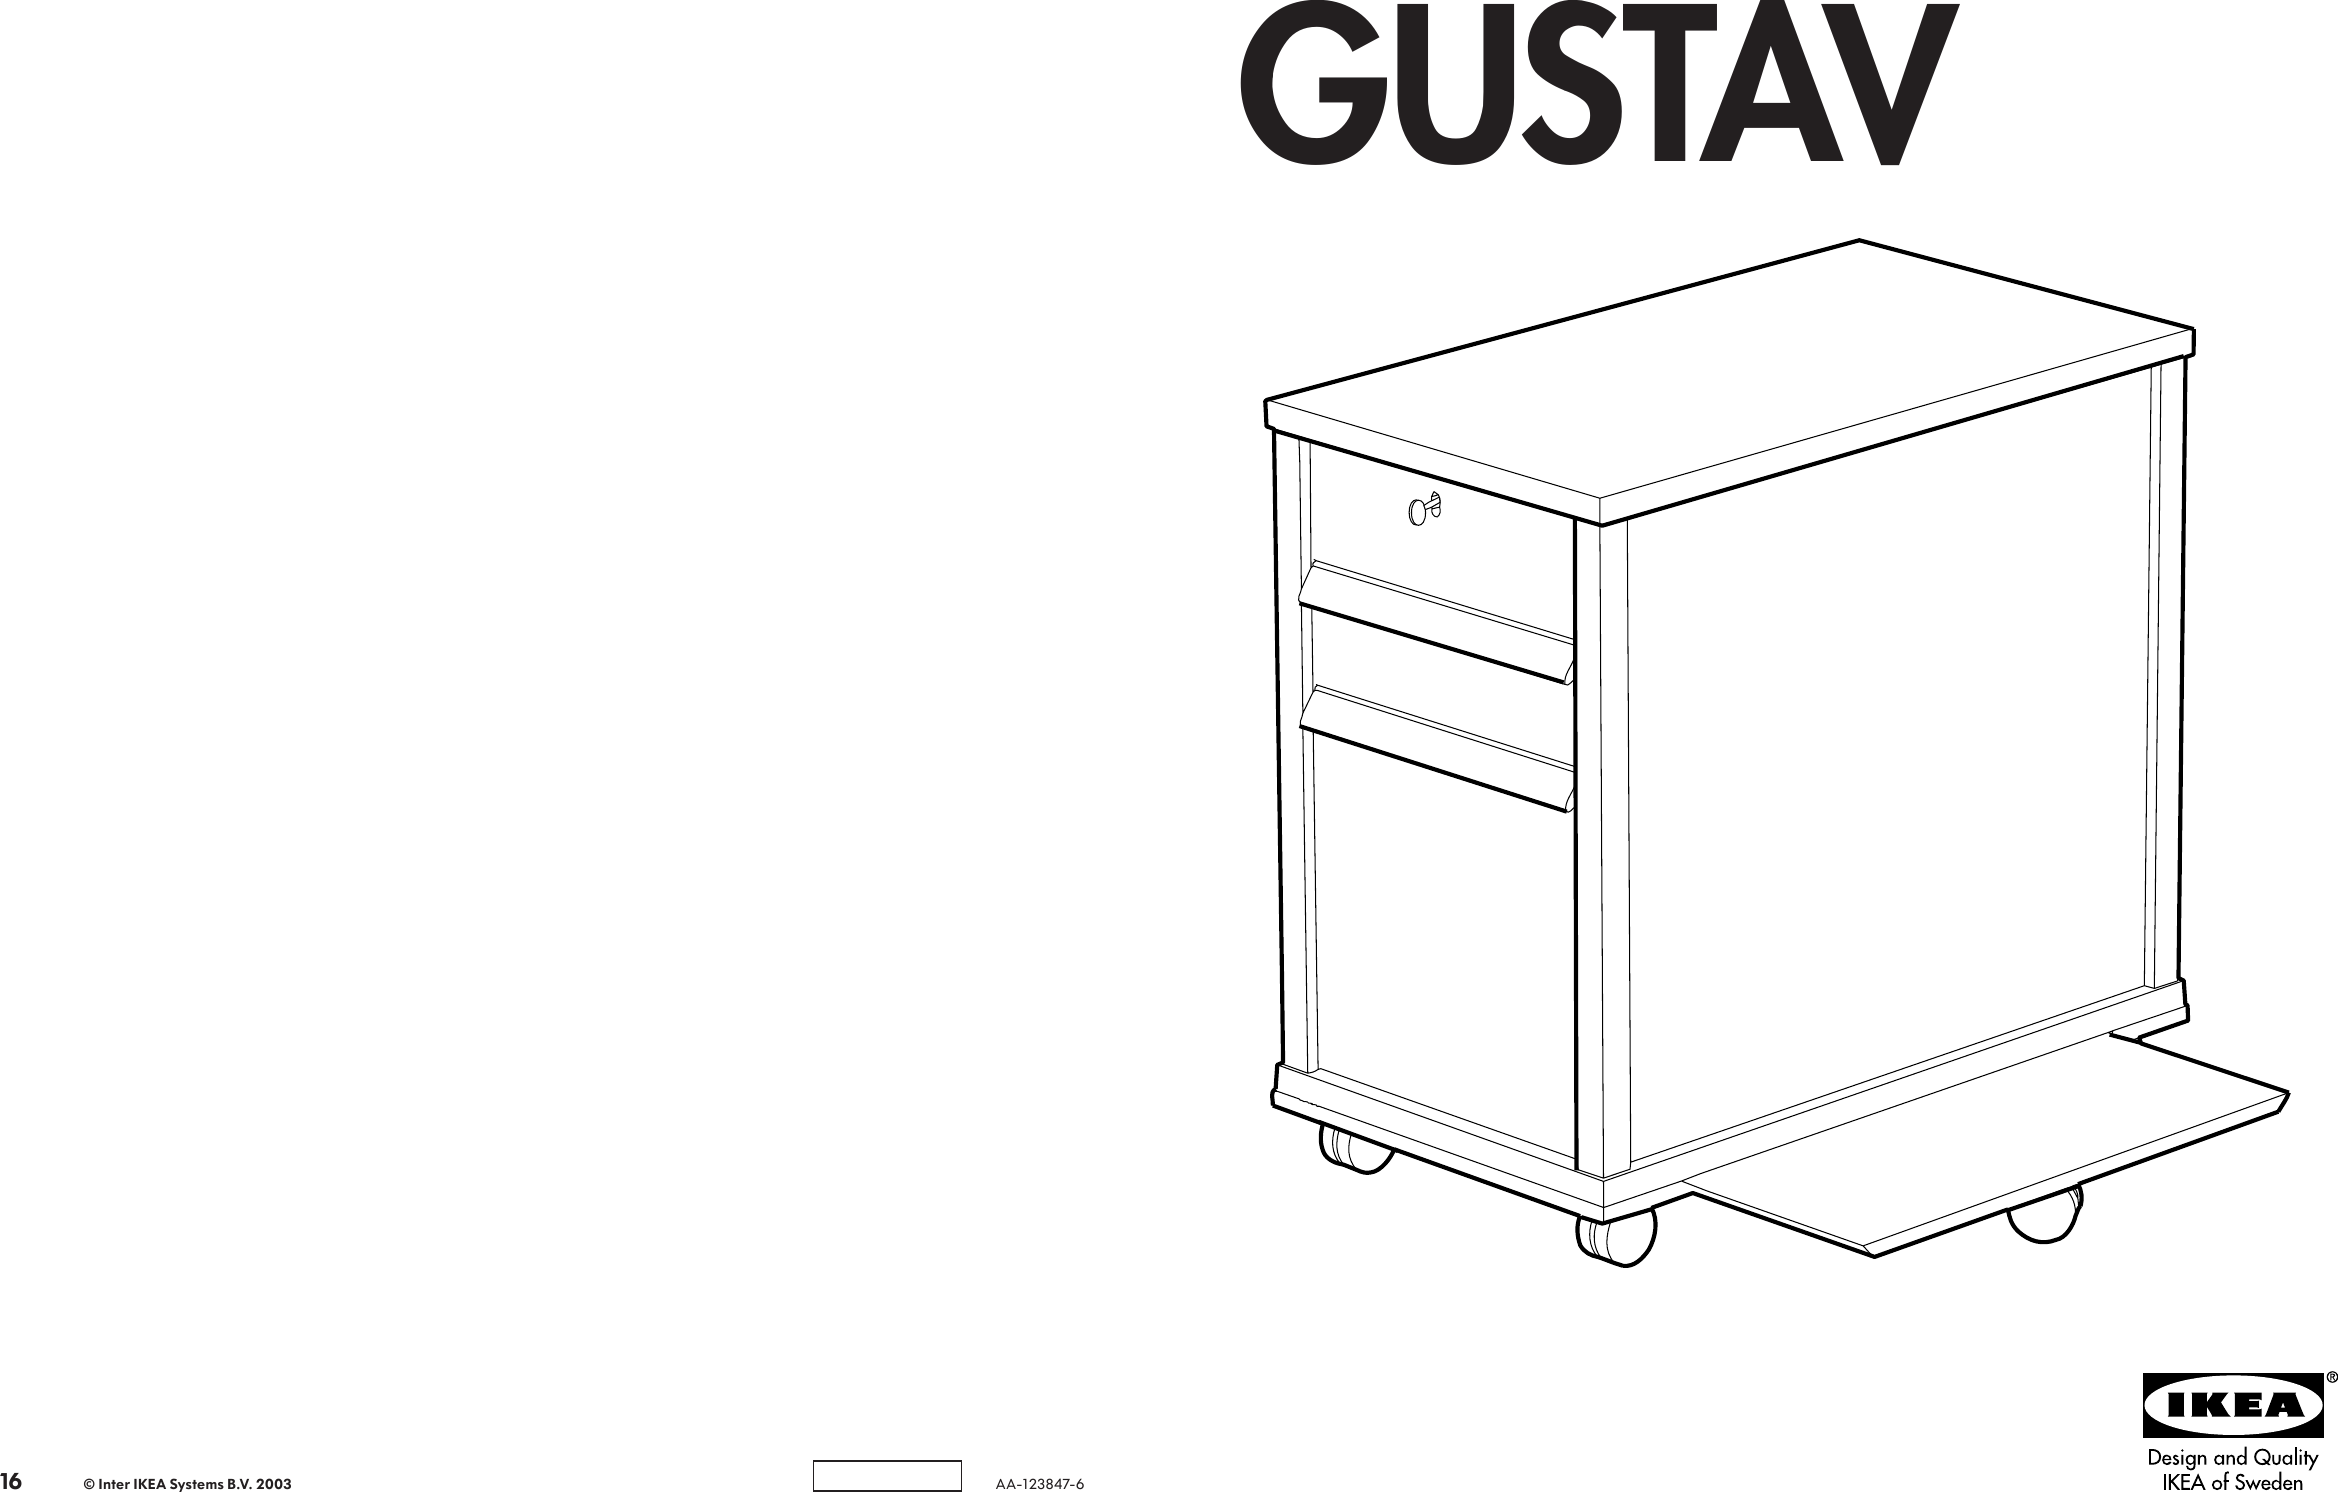 Ikea Gustav Drawer Unit Casters 14x24 Assembly Instruction